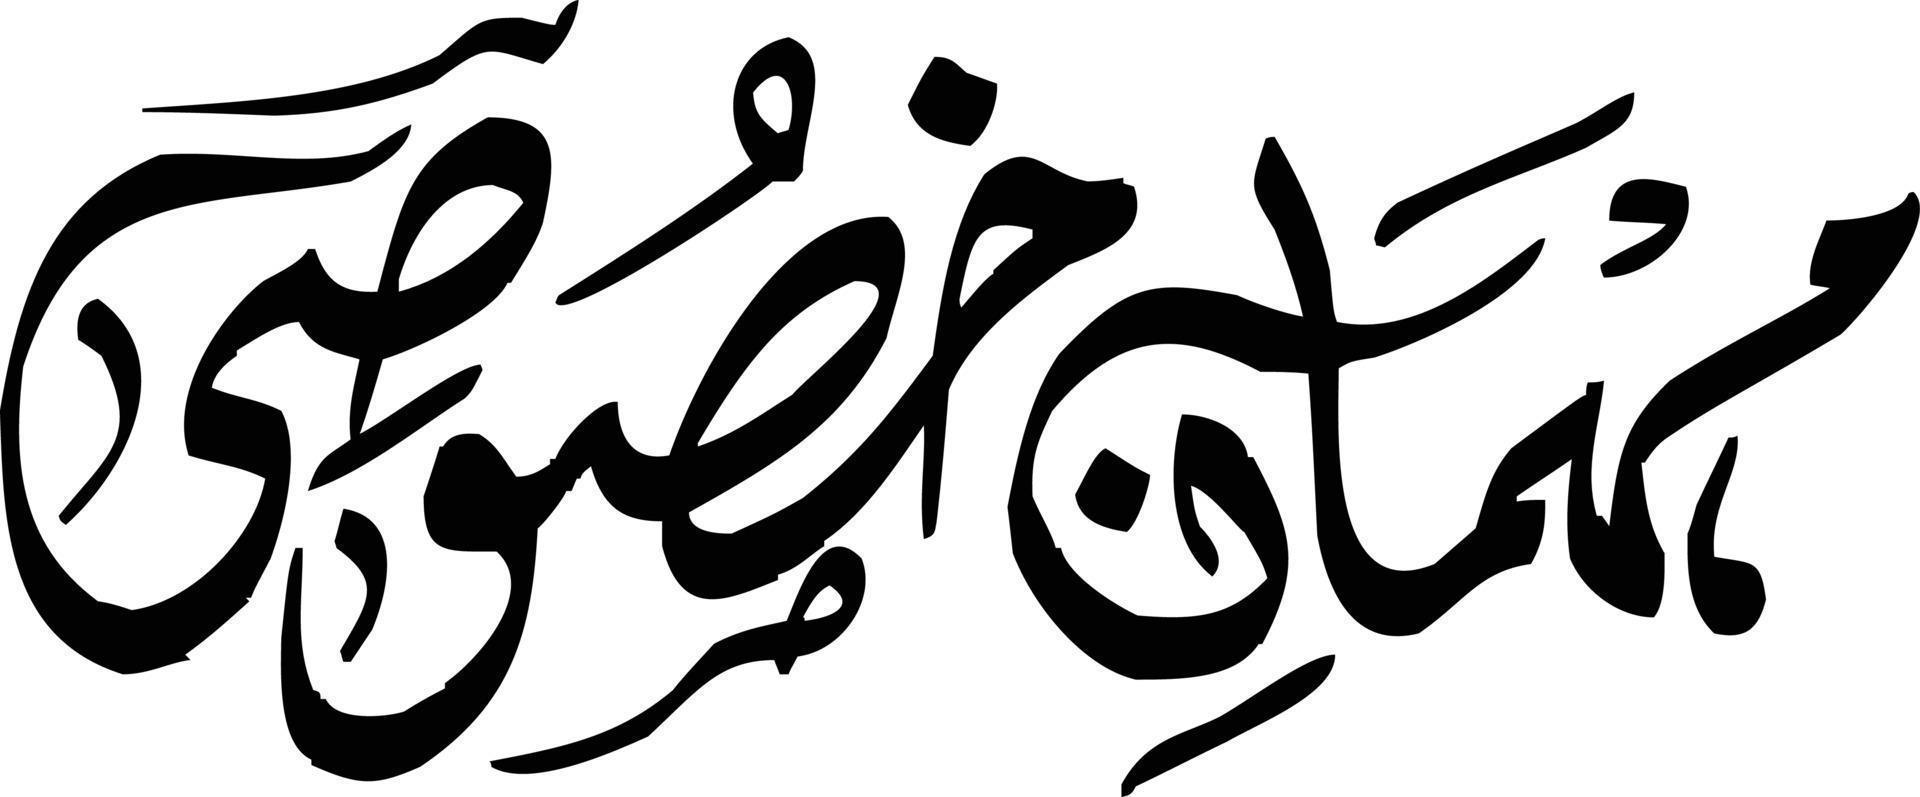 mhaman khisosy título caligrafía islámica vector libre